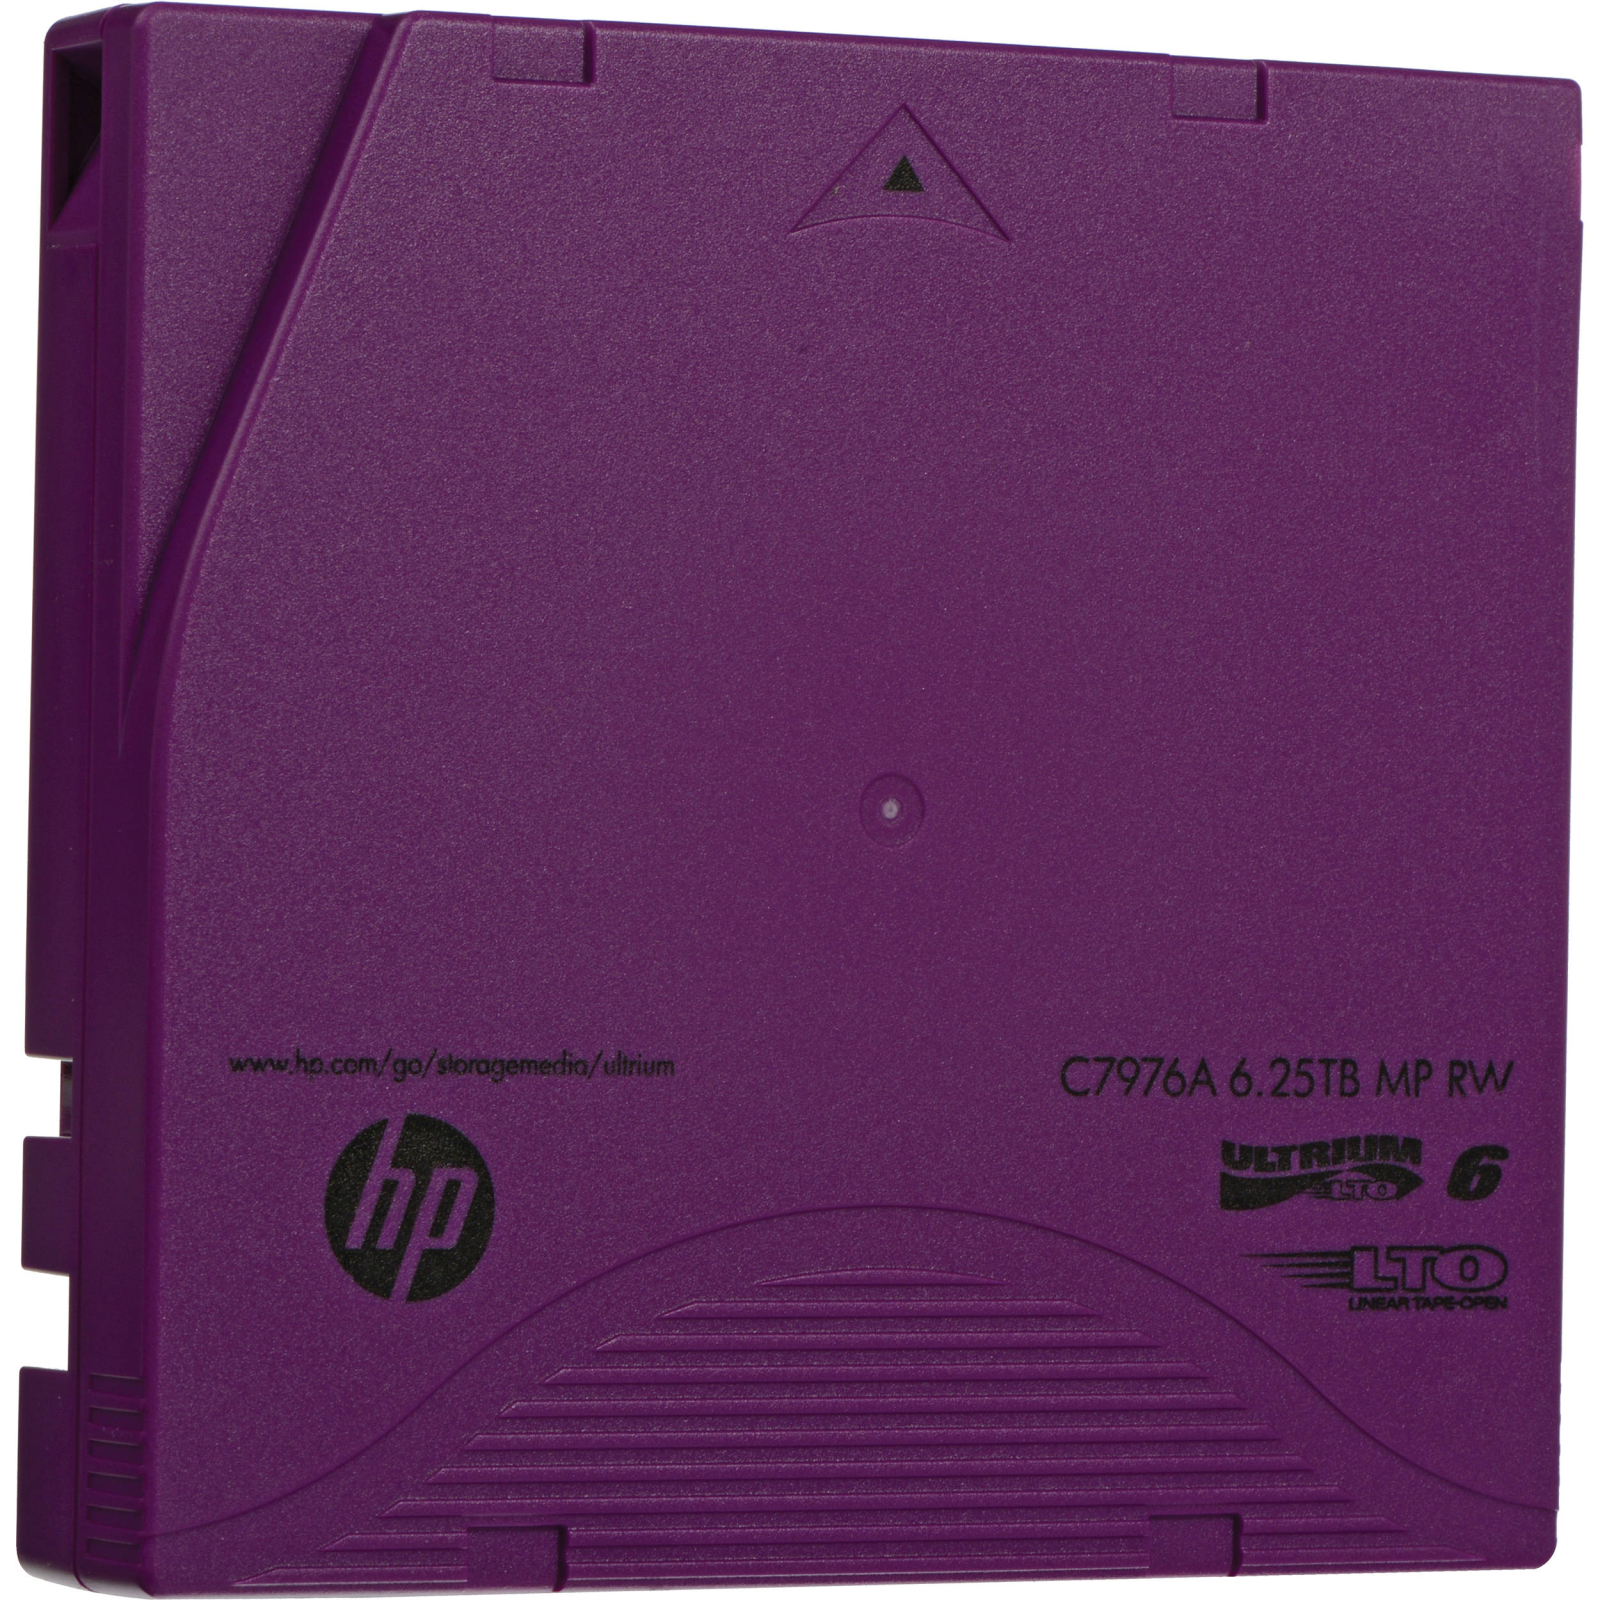 Дата-картридж HP LTO-6 Ultrium 6.25TB MP RW Data Cartridge (C7976A) зображення 2